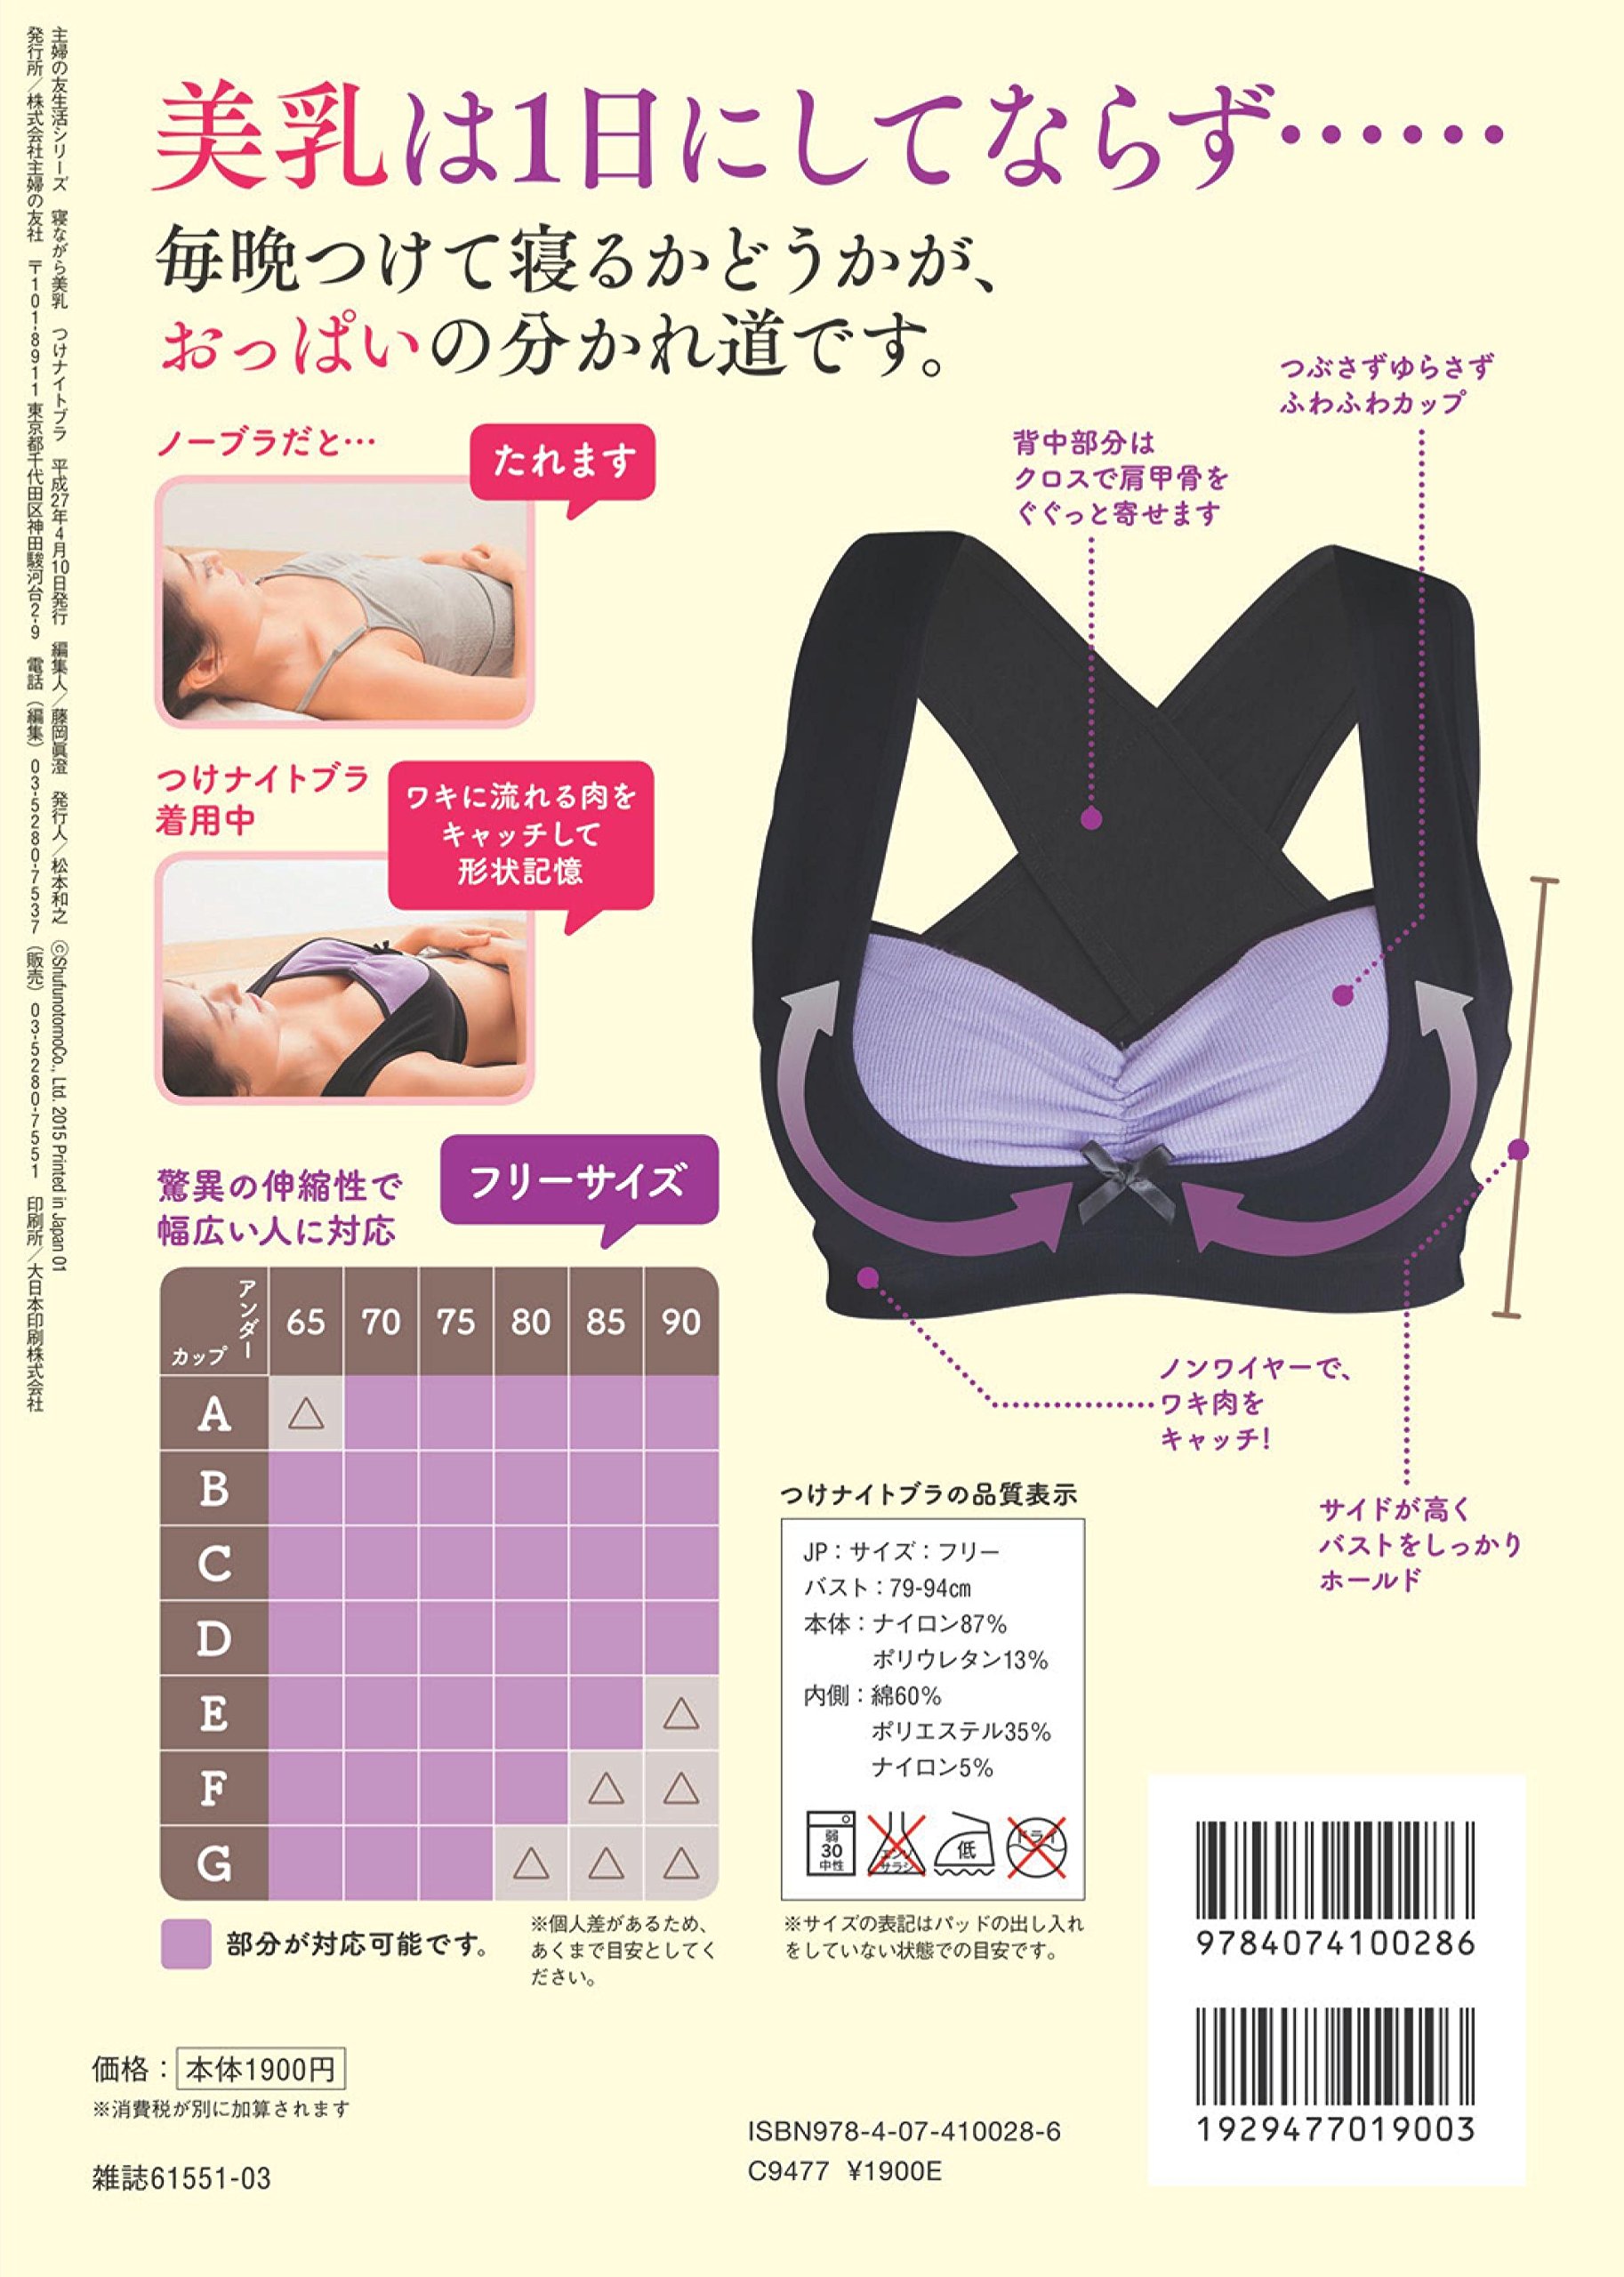 Beautiful Breasts While Sleeping Wearing Night Bra Japan Book w